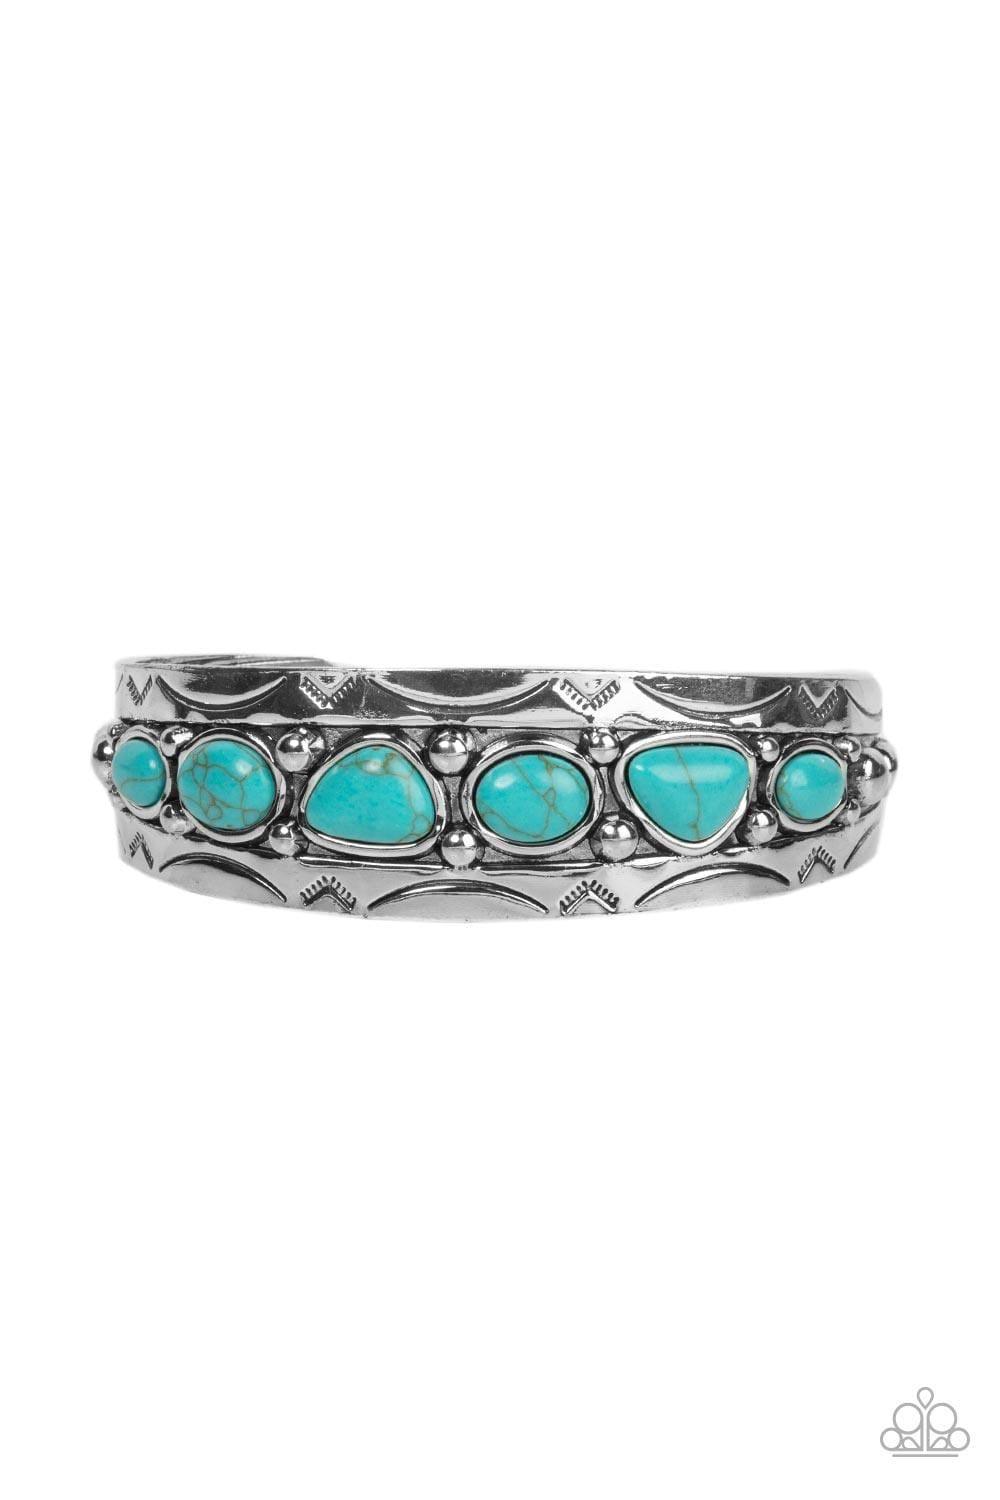 Paparazzi Accessories - Saguaro Sultan - Blue Turquoise Bracelet - Bling by JessieK